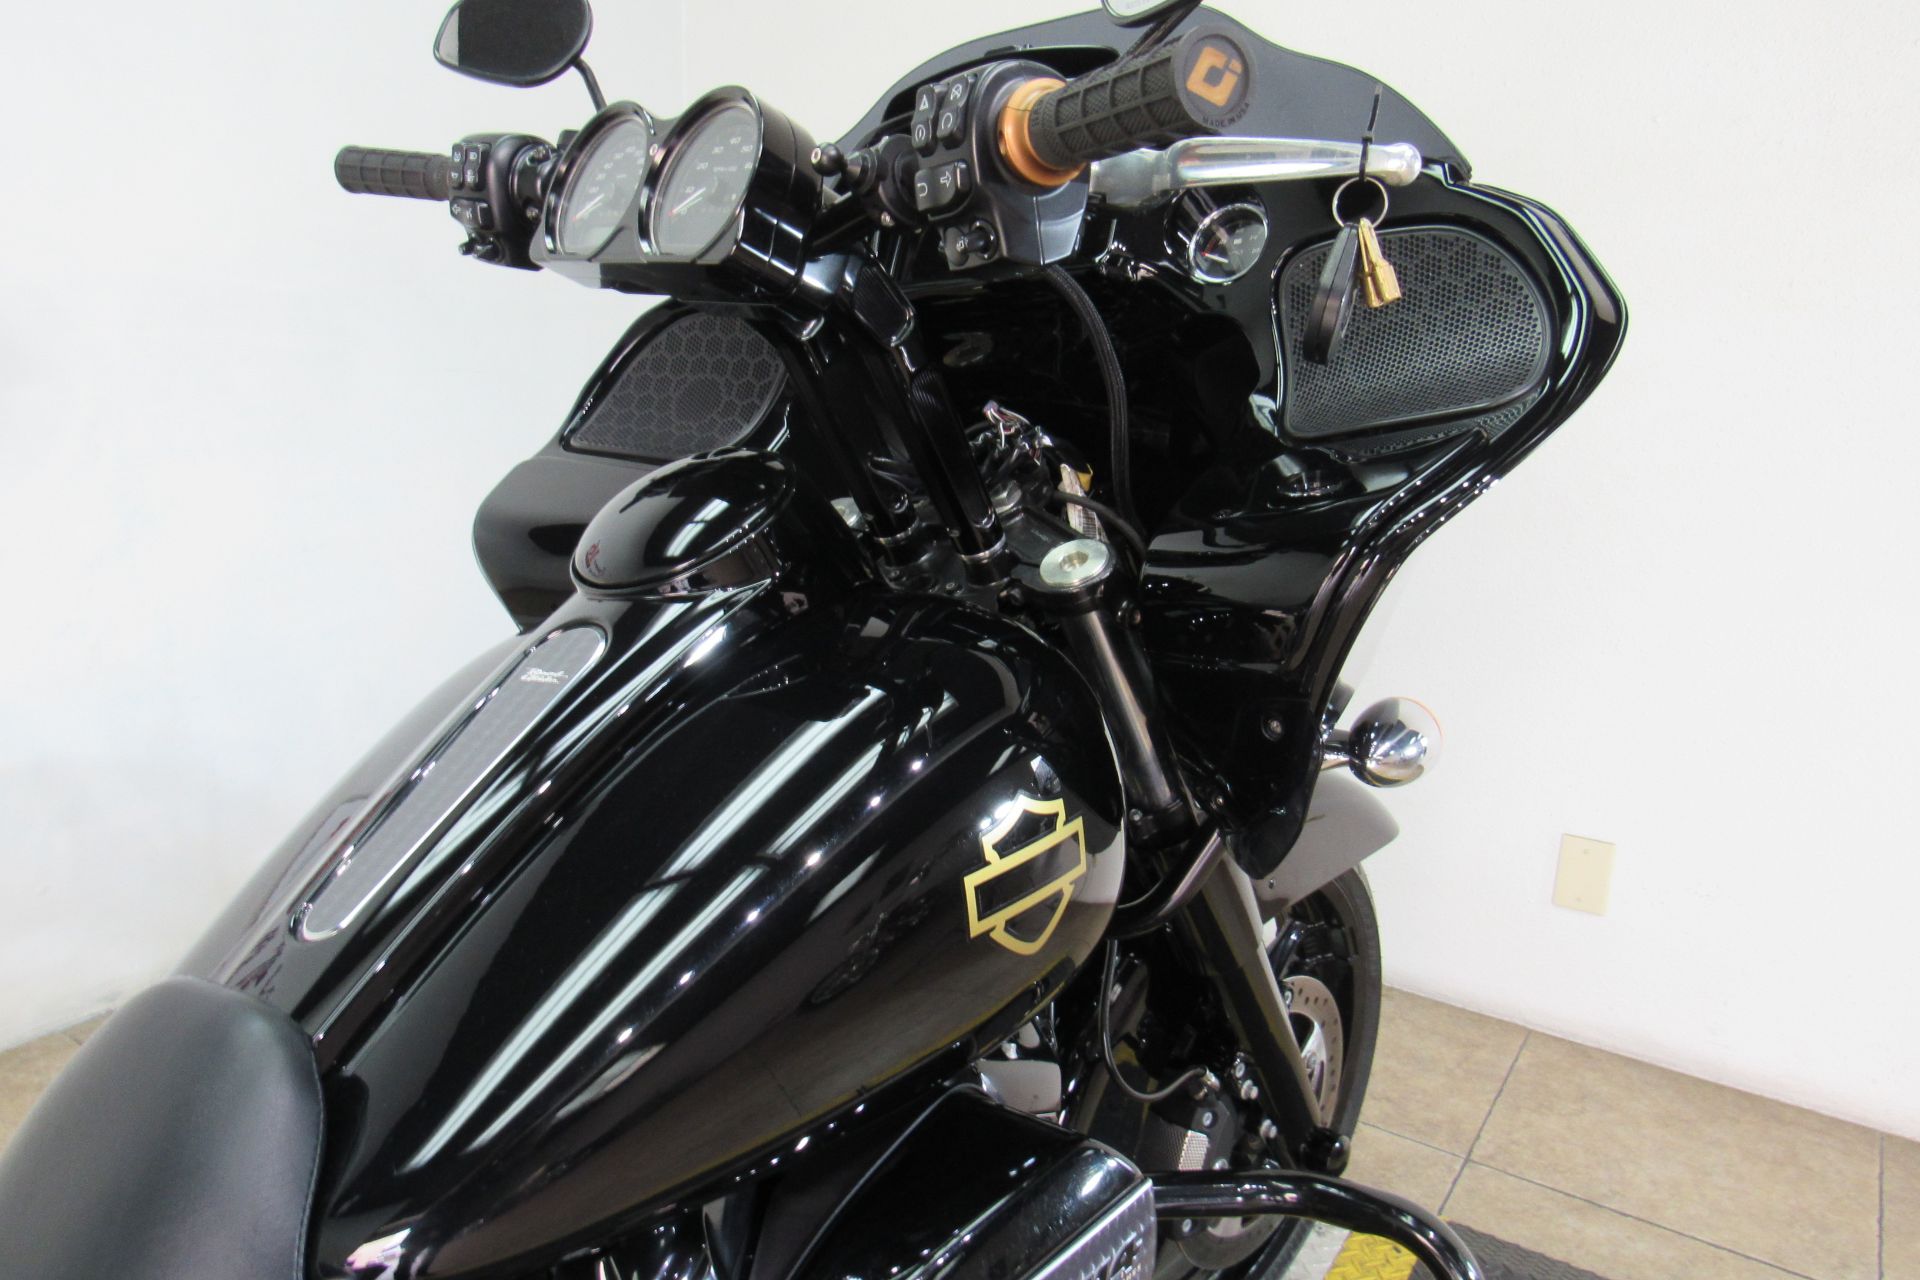 2020 Harley-Davidson Road Glide® Special in Temecula, California - Photo 27